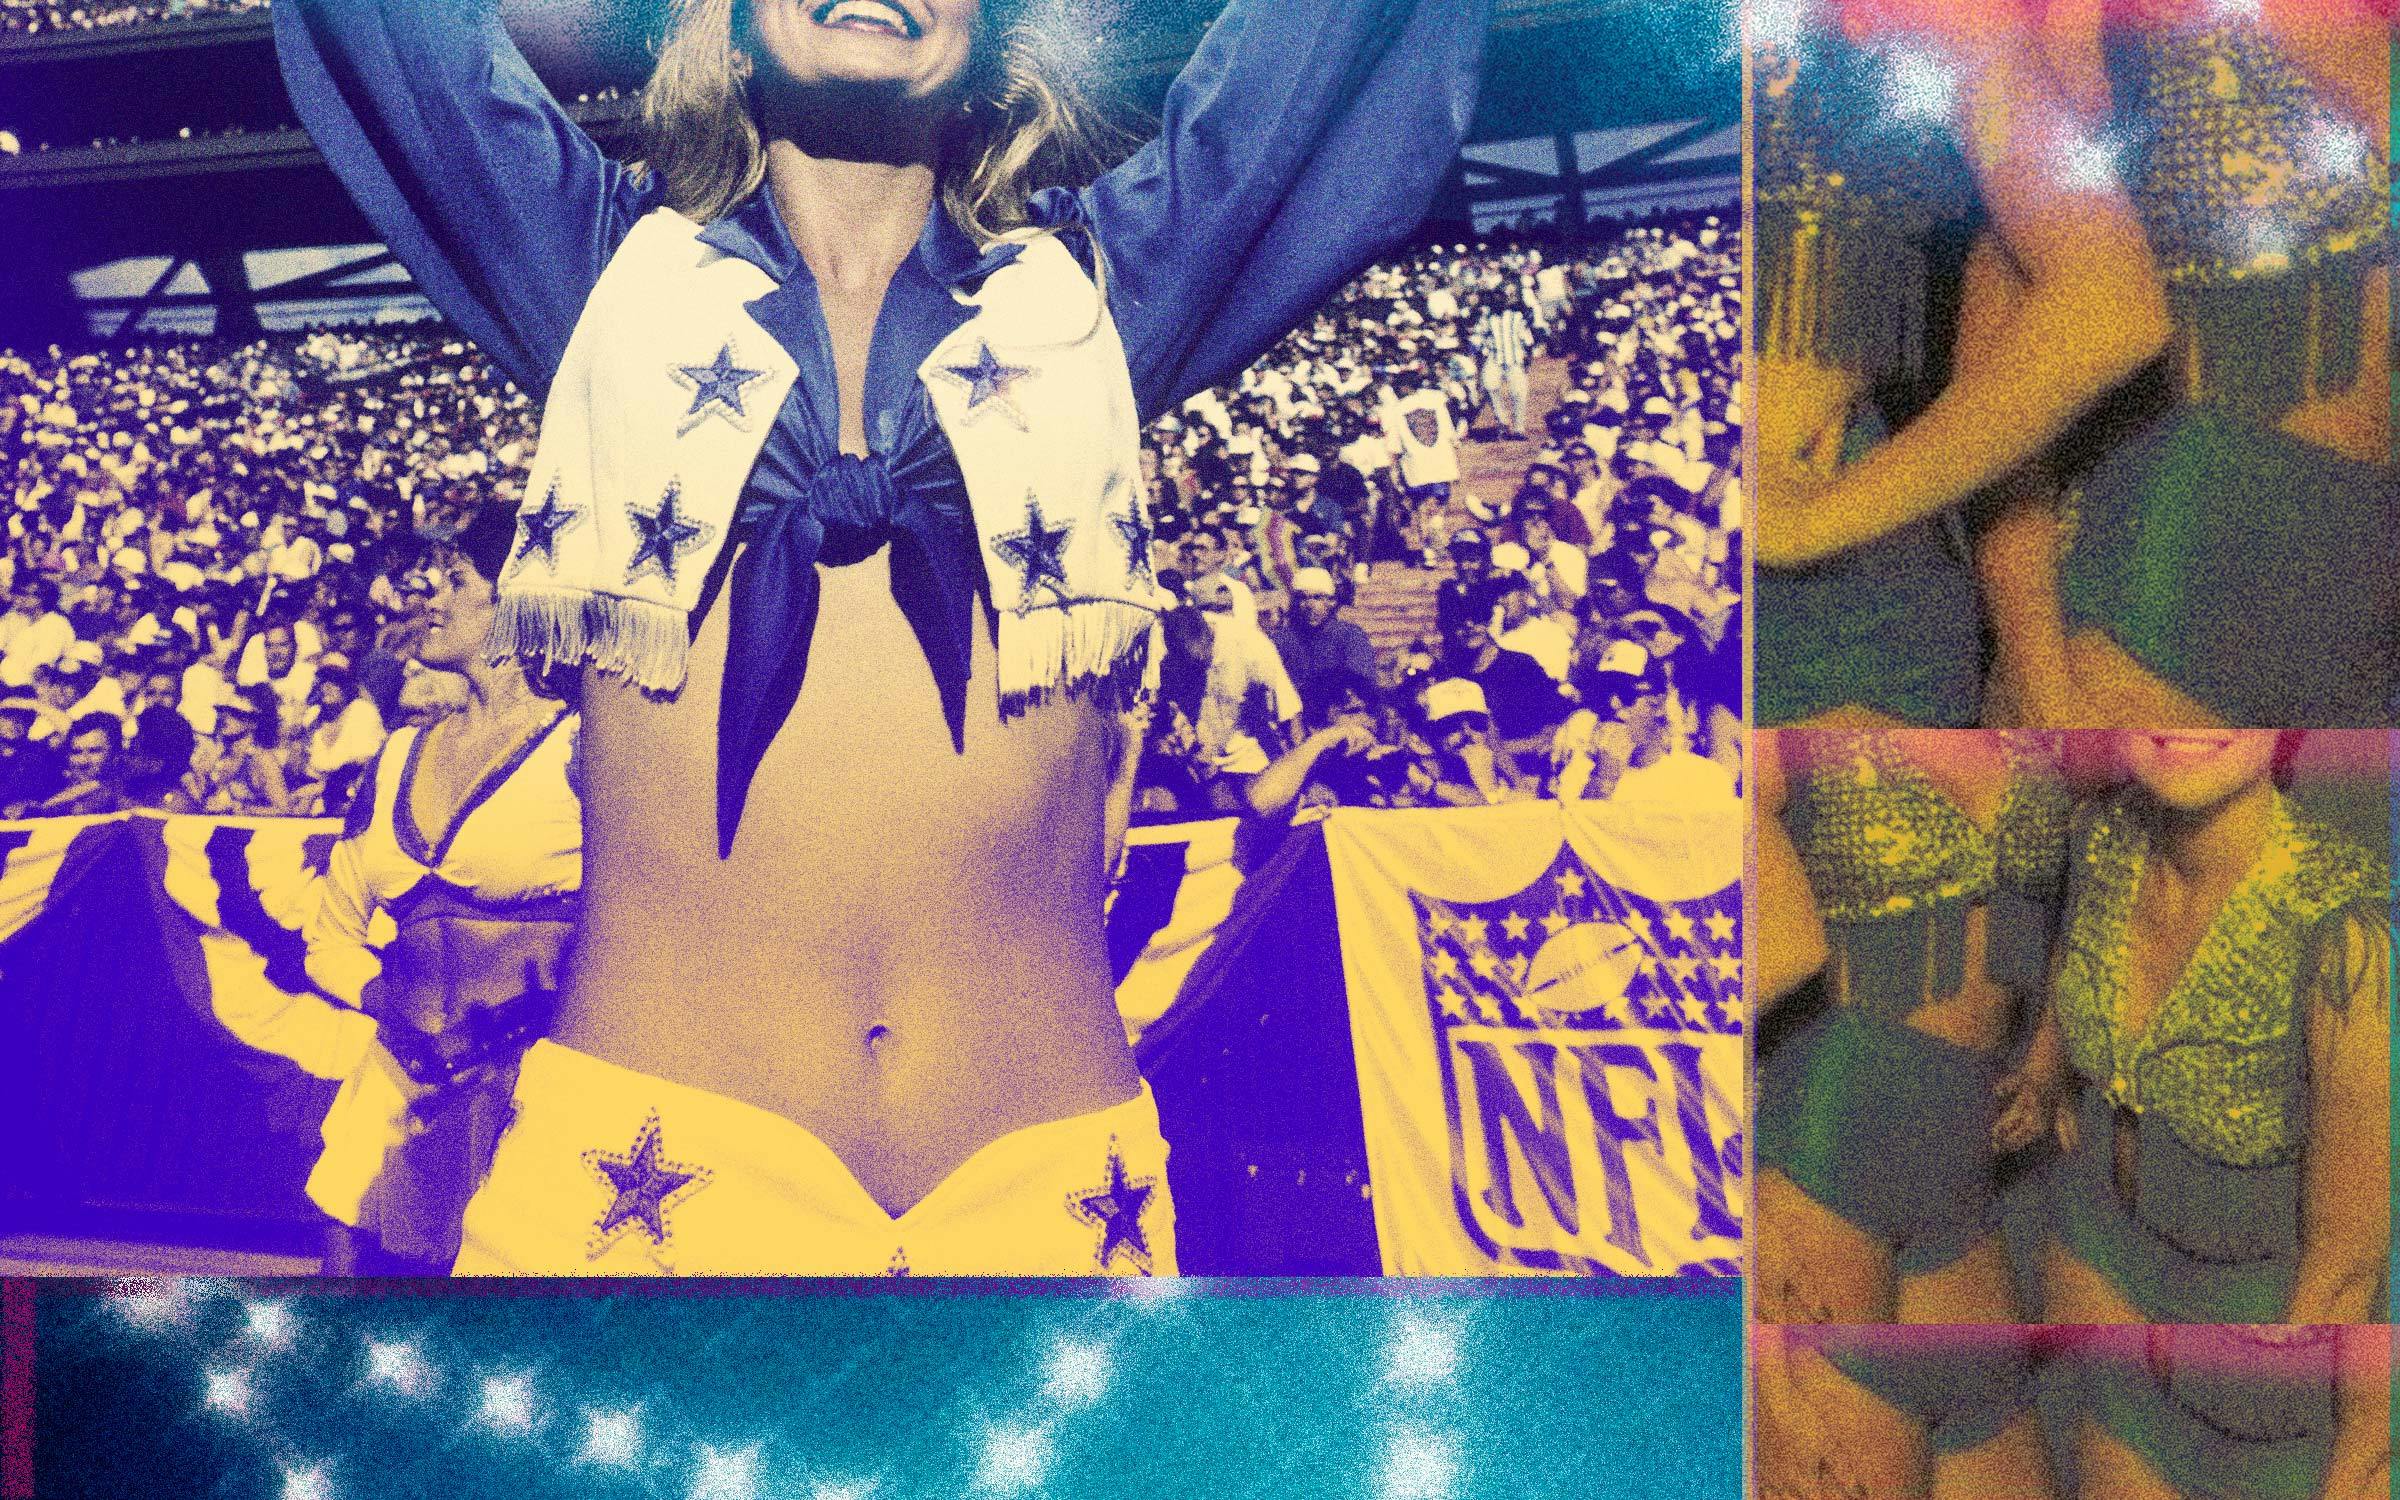 danielle daniels add naked dallas cowboys cheerleaders photo